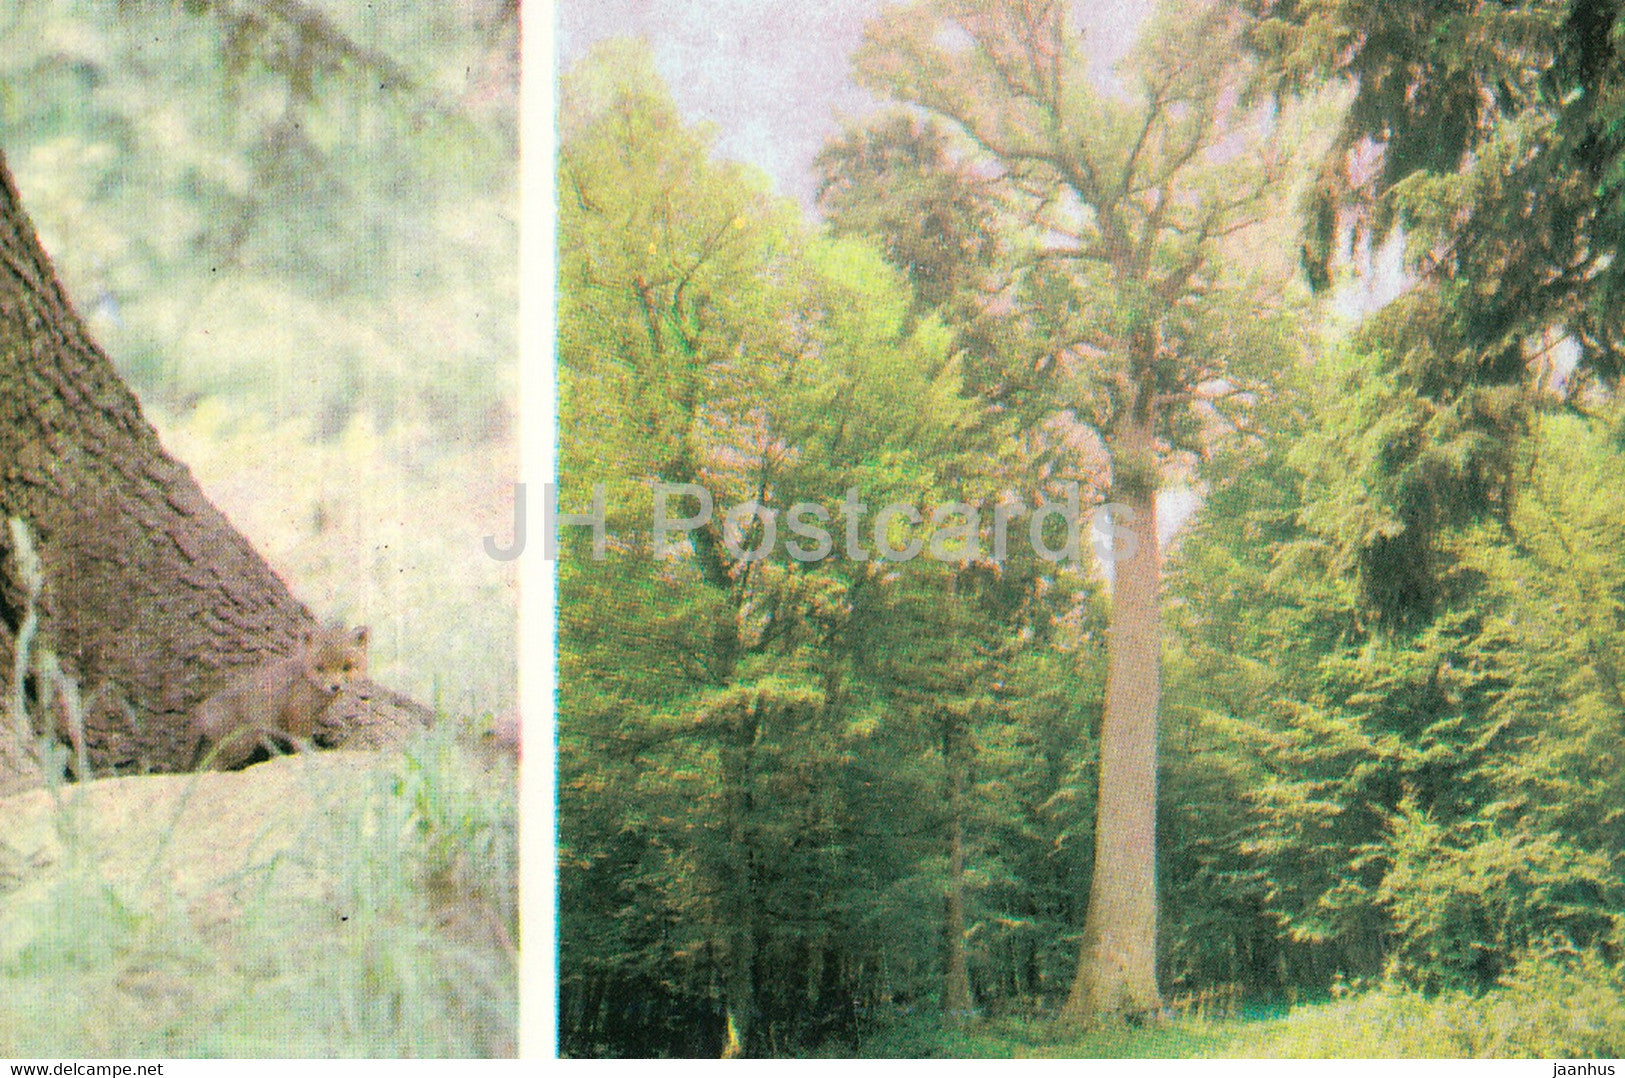 Belovezhskaya Pushcha National Park - A Young Fox near its burrow - The King Oak - 1981 - Berarus USSR - unused - JH Postcards